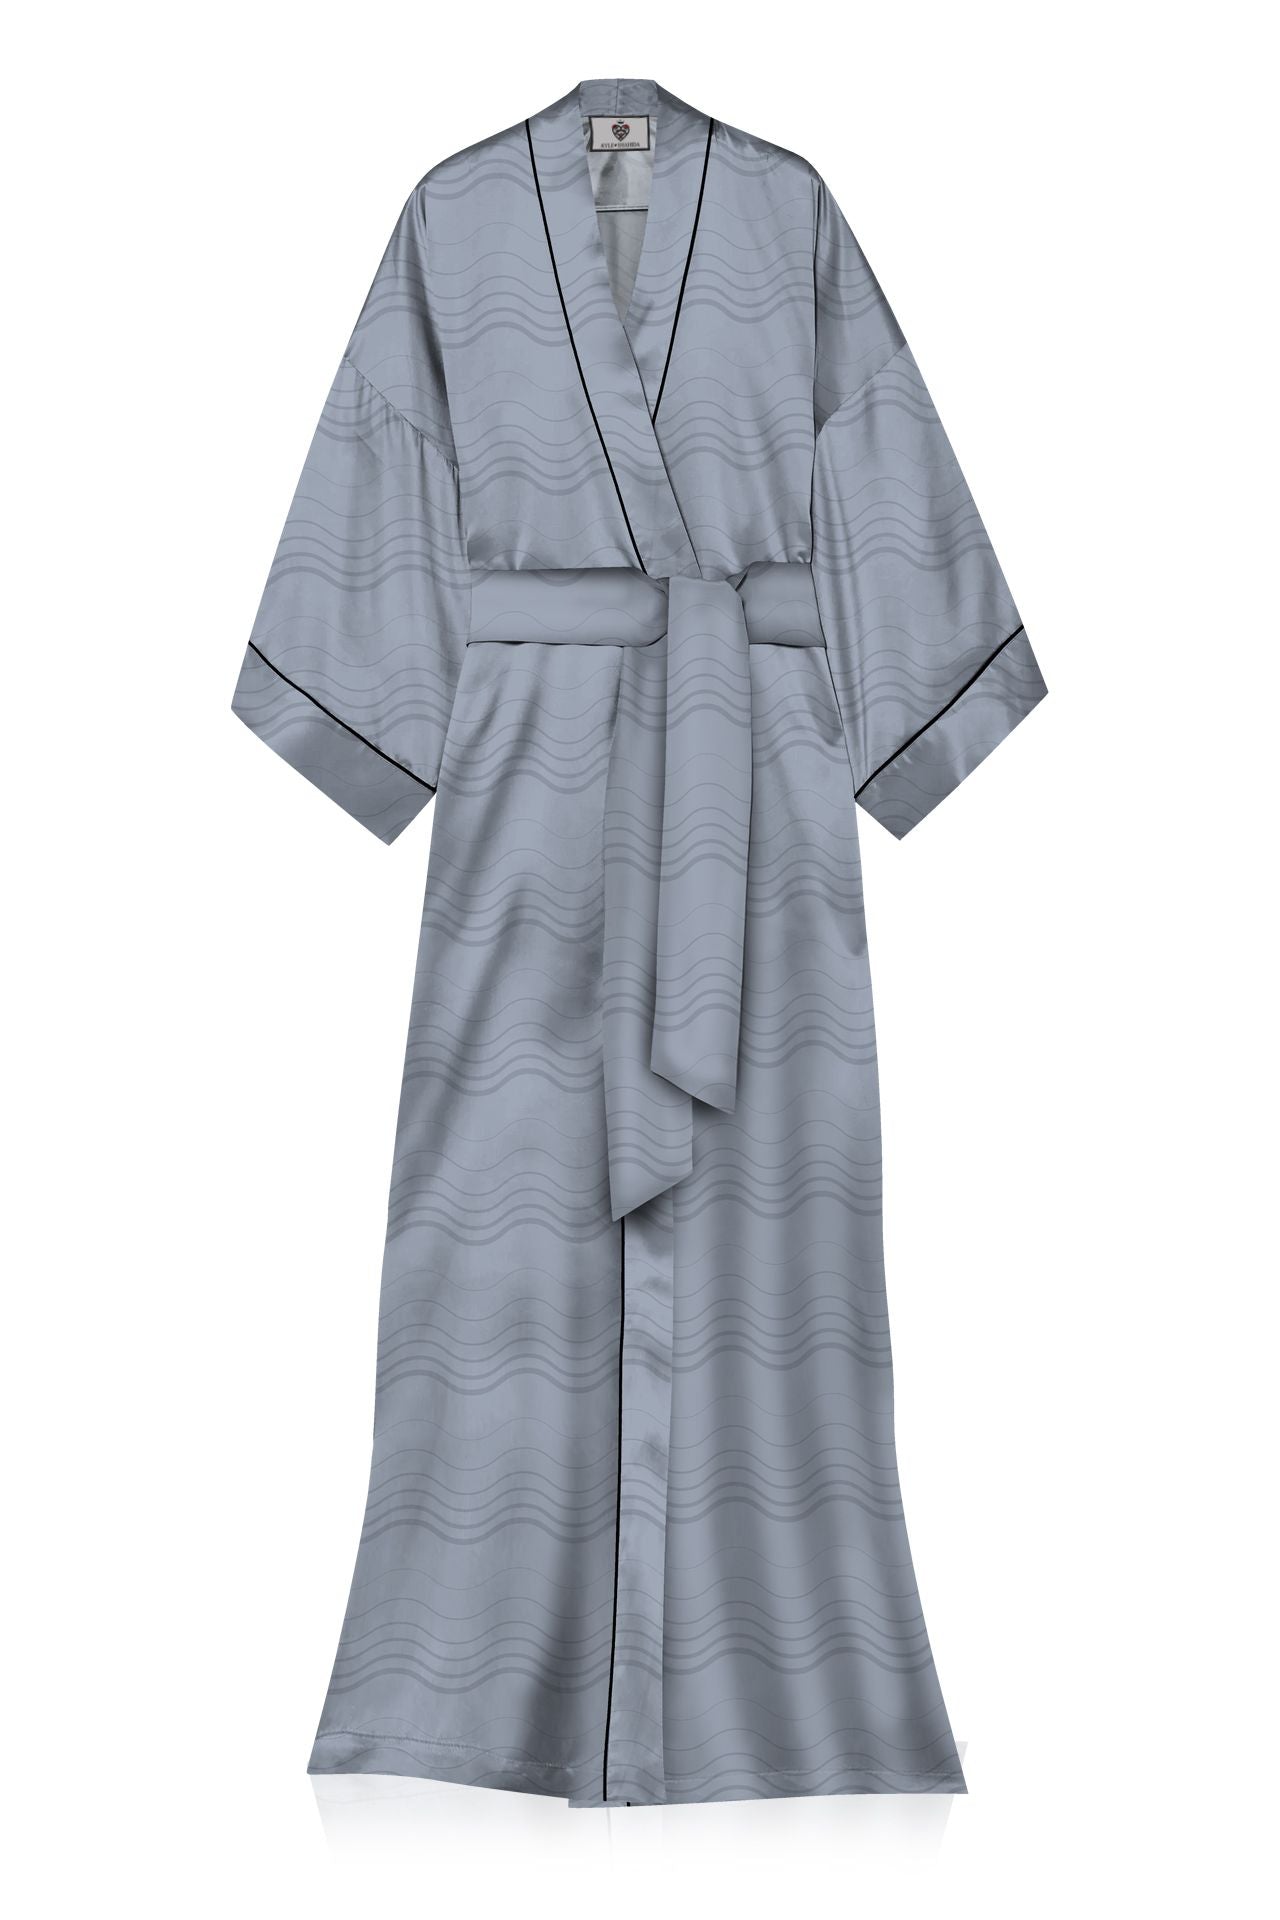 "light grey robe" "Kyle X Shahida" "robe silk kimono" "long silk kimono"